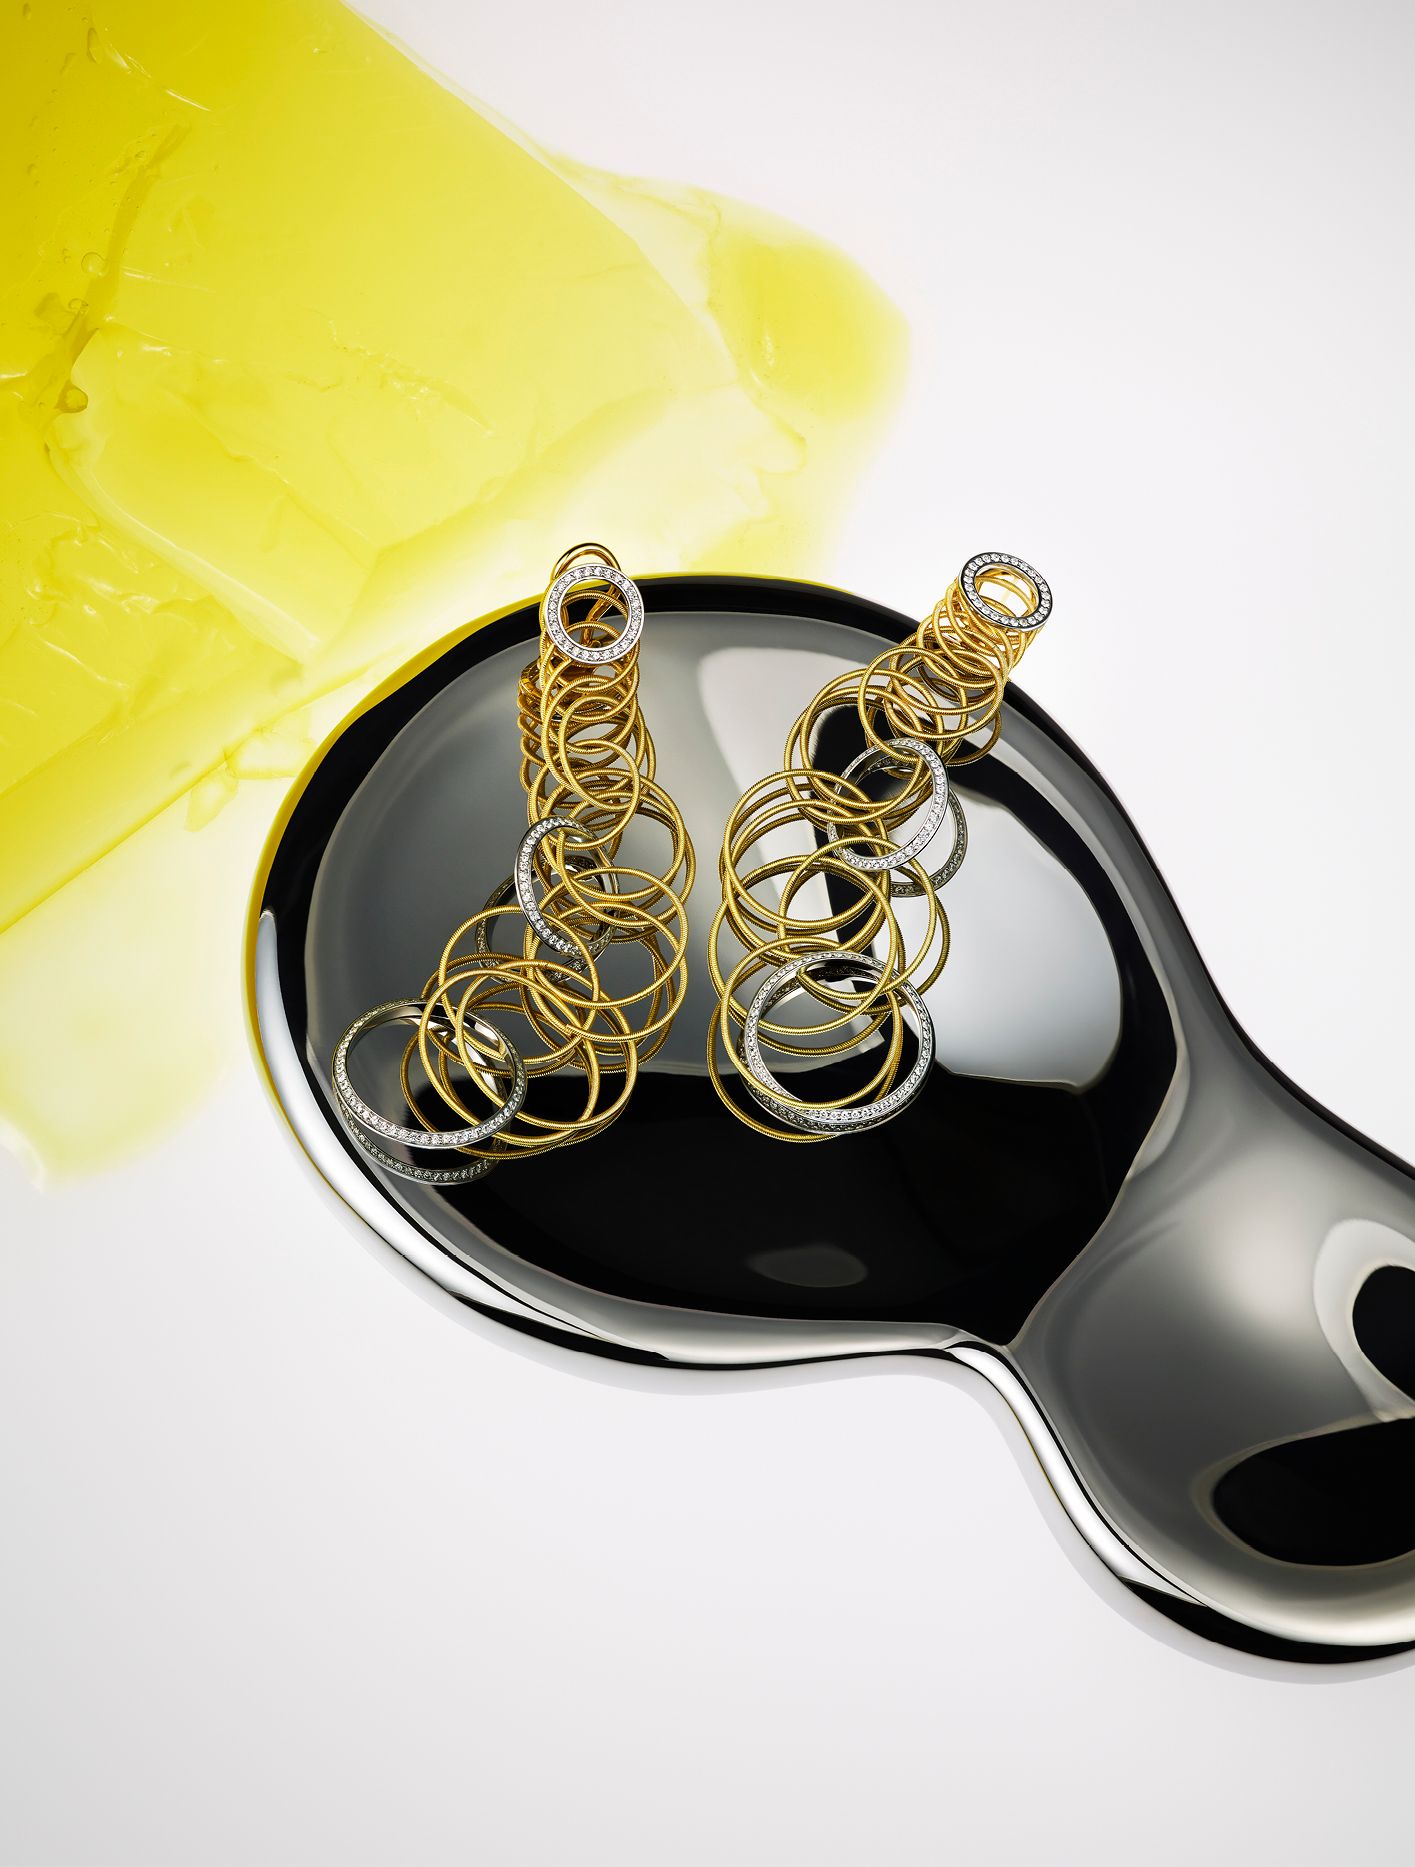 Buccellati Hawaii earrings in 18ct yellow and white gold and round brilliant-cut diamonds, £13,500, buccellati.com